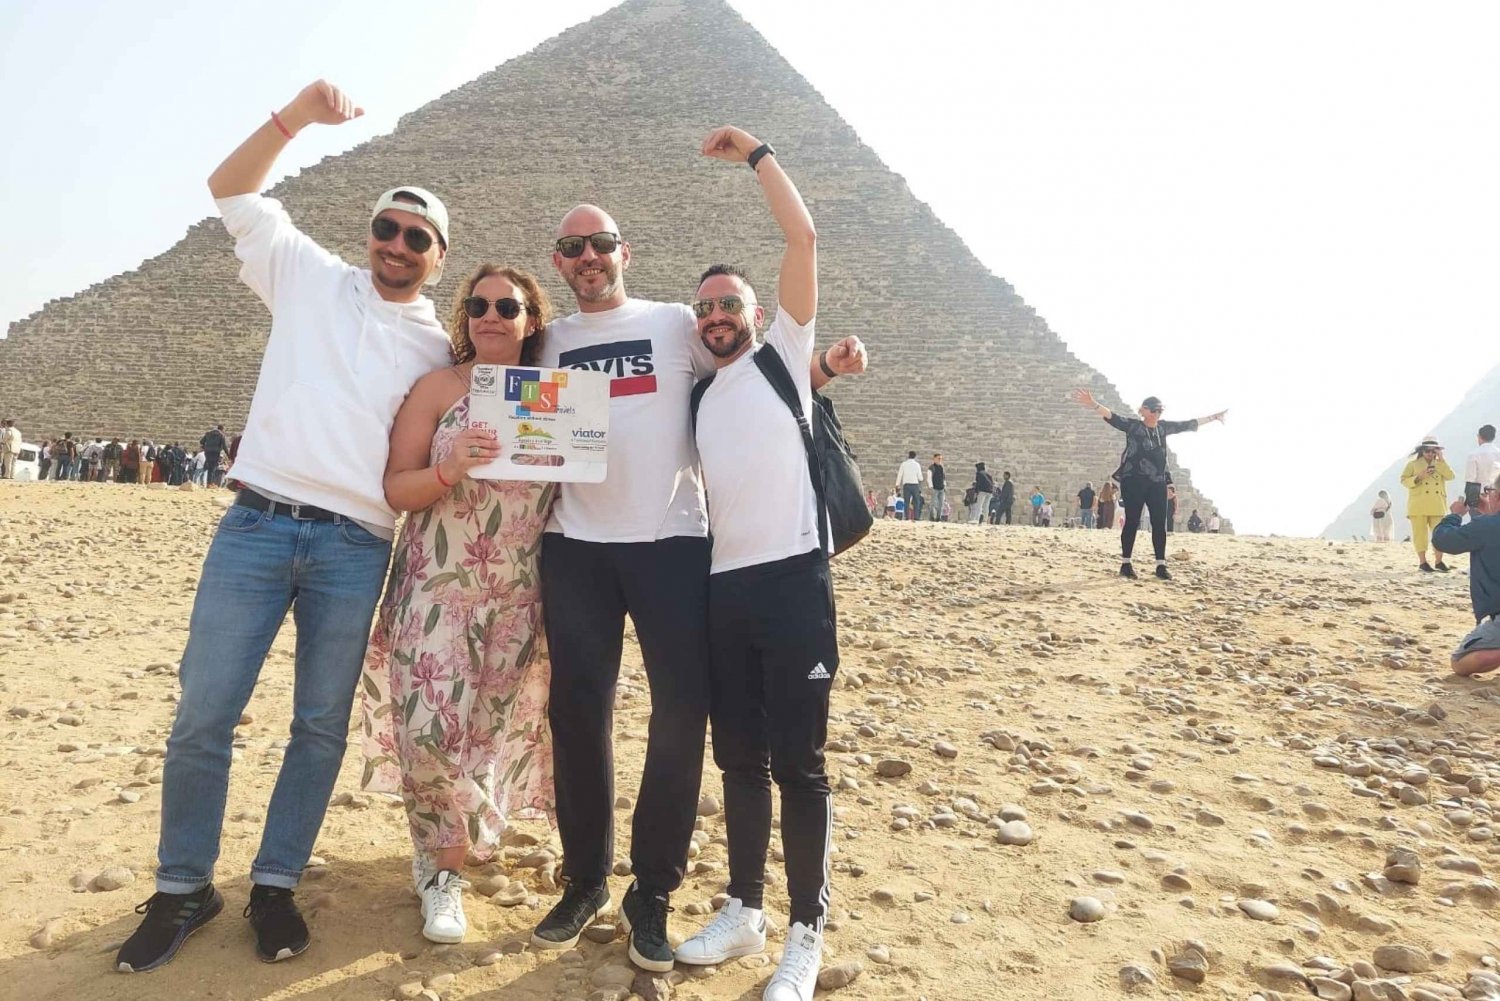 Exploring-the-Pyramids-of-Giza